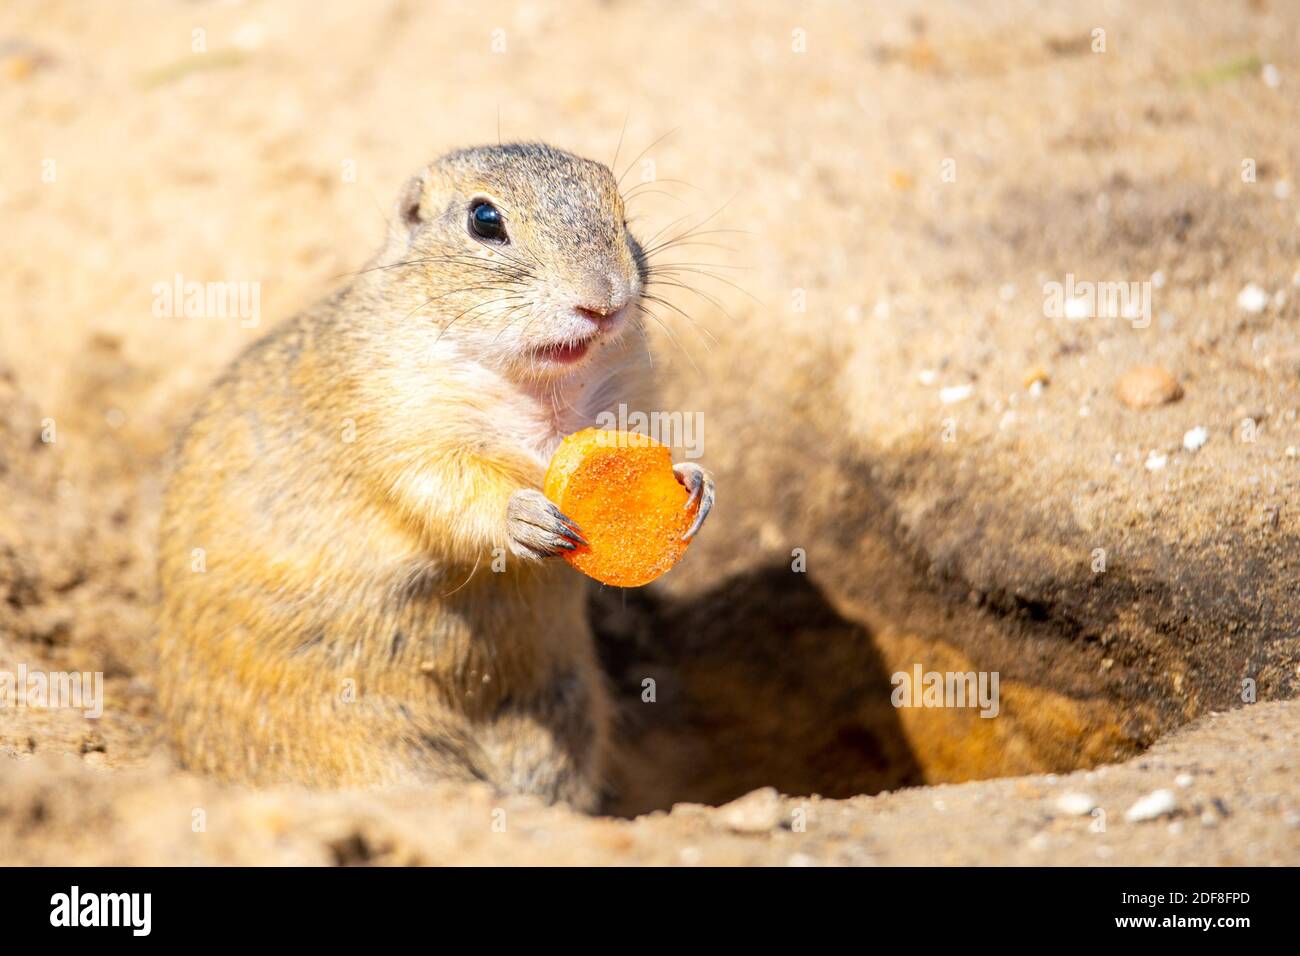 European ground squirrel, Spermophilus citellus, aka European souslik. Small rodent eating small piece of carrot Stock Photo